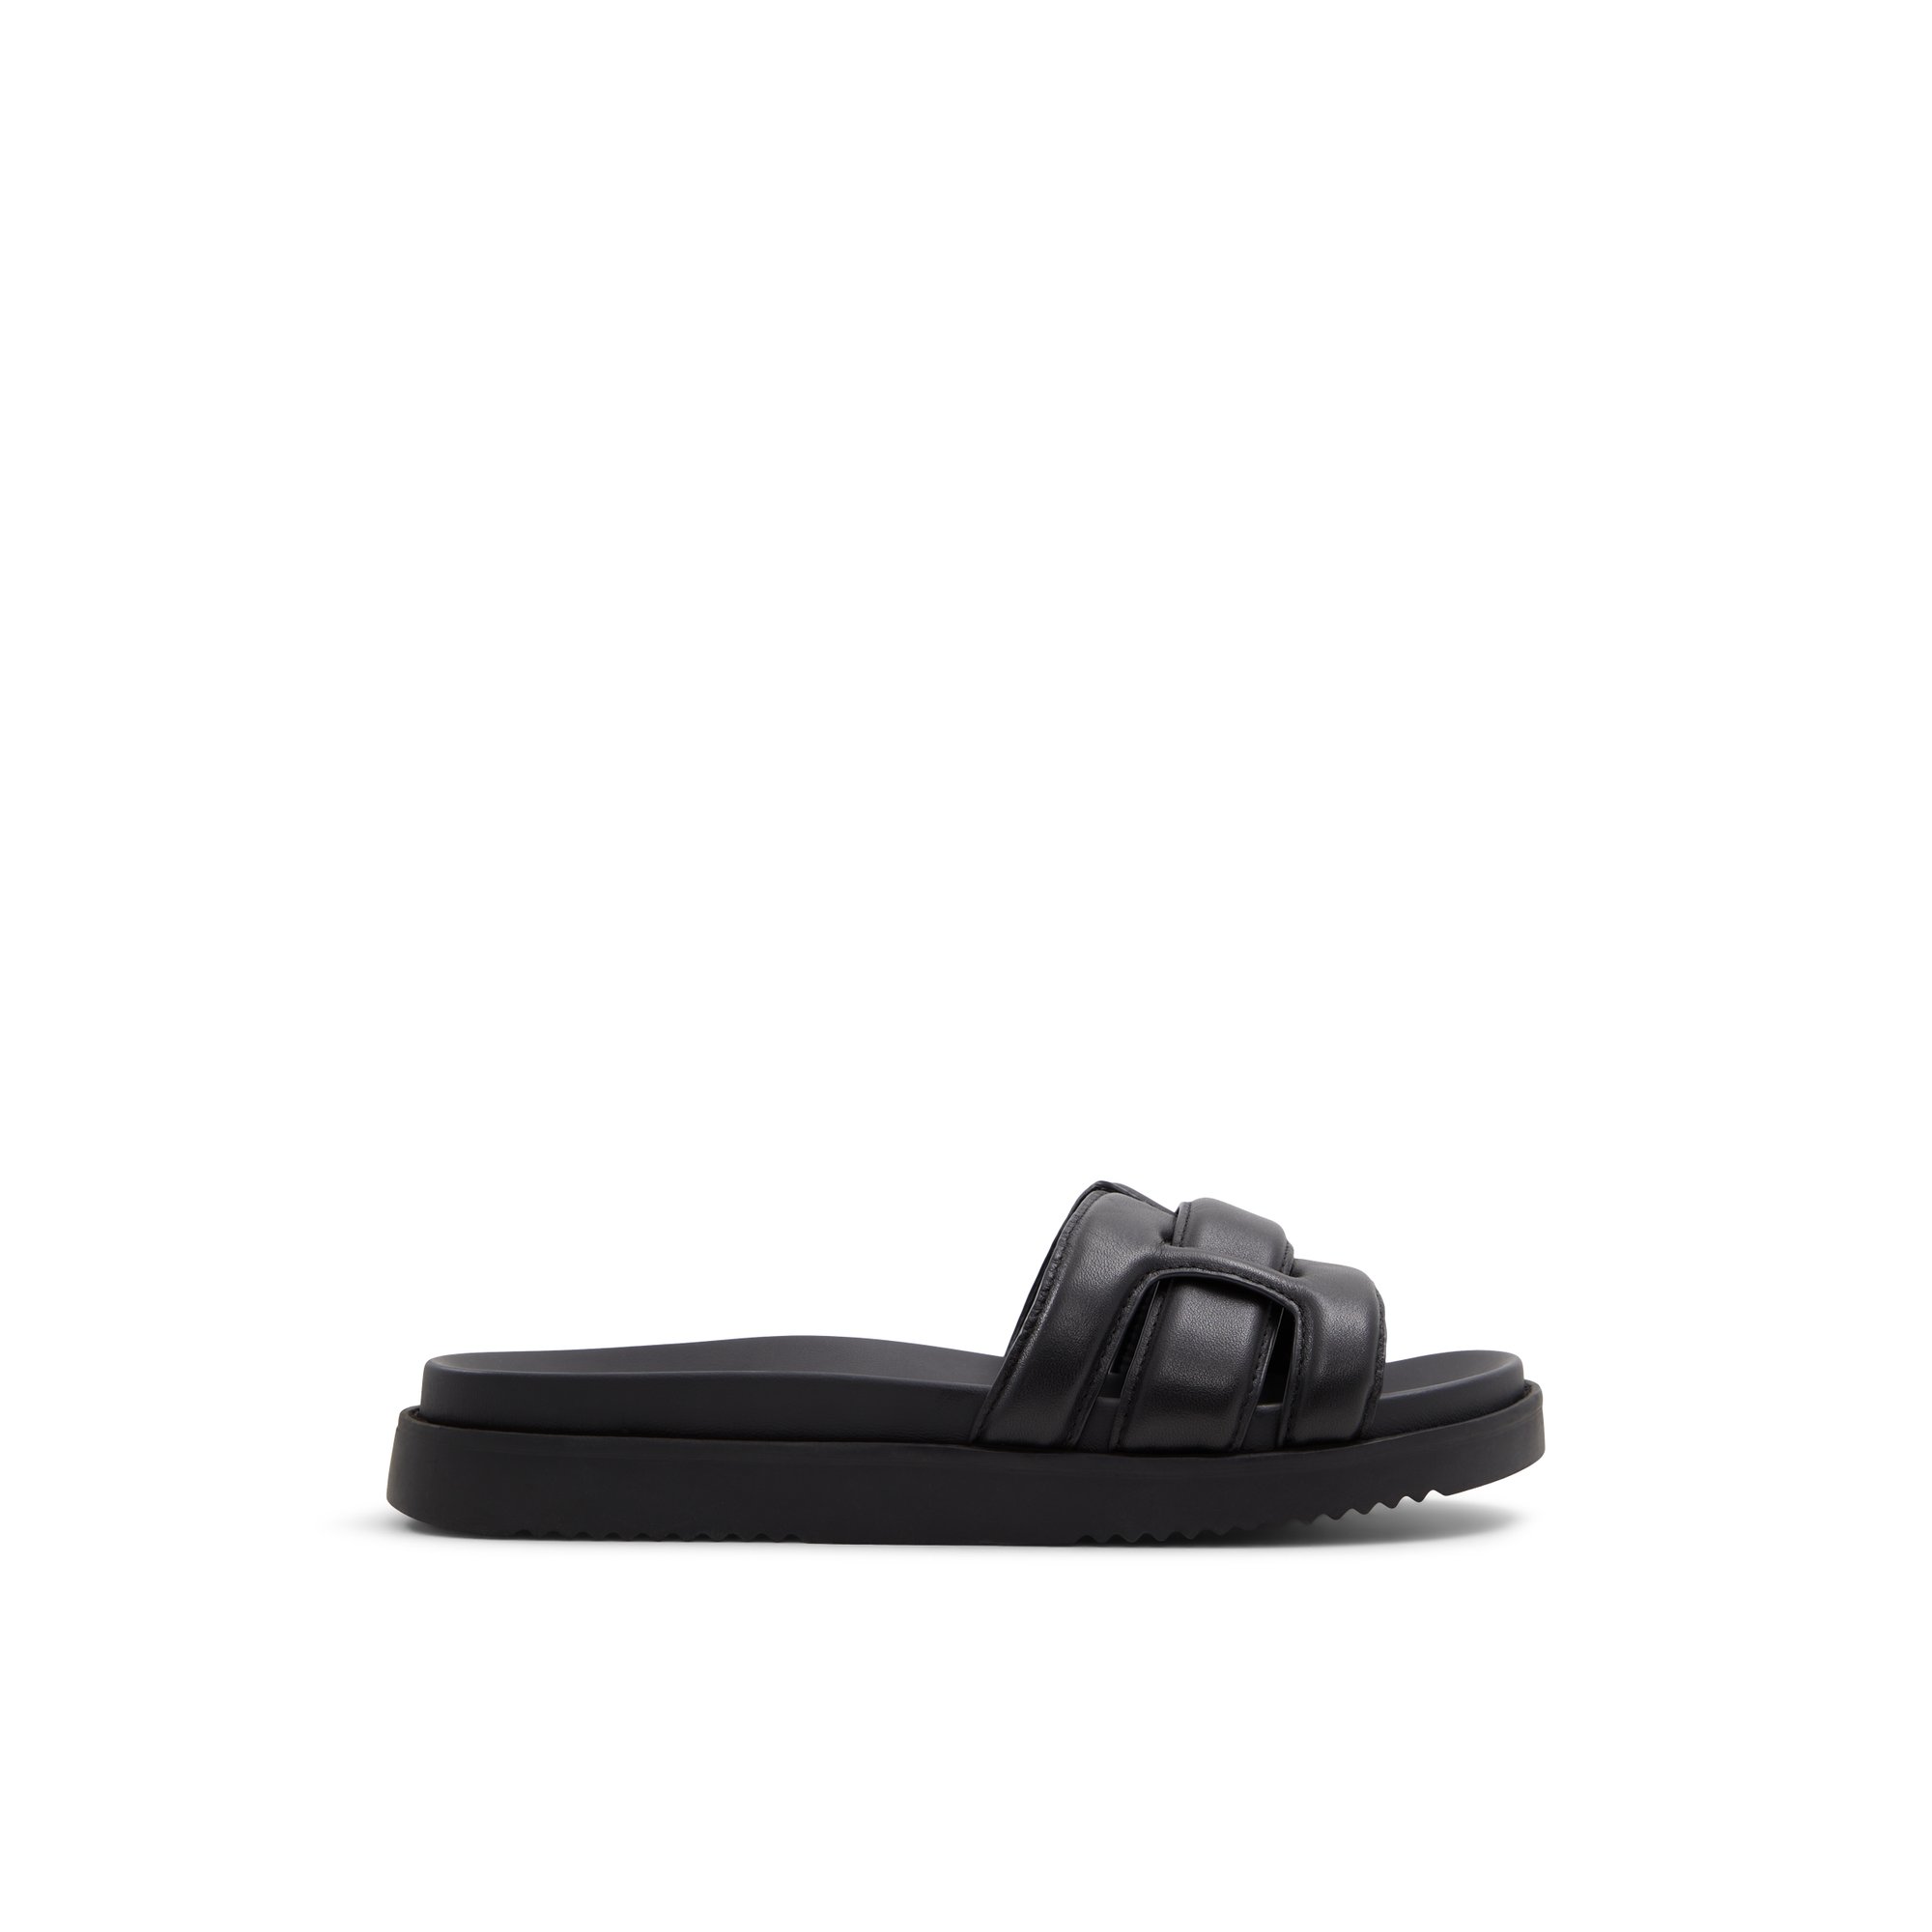 ALDO Wylalaendar - Women's Sandals Flats - Black